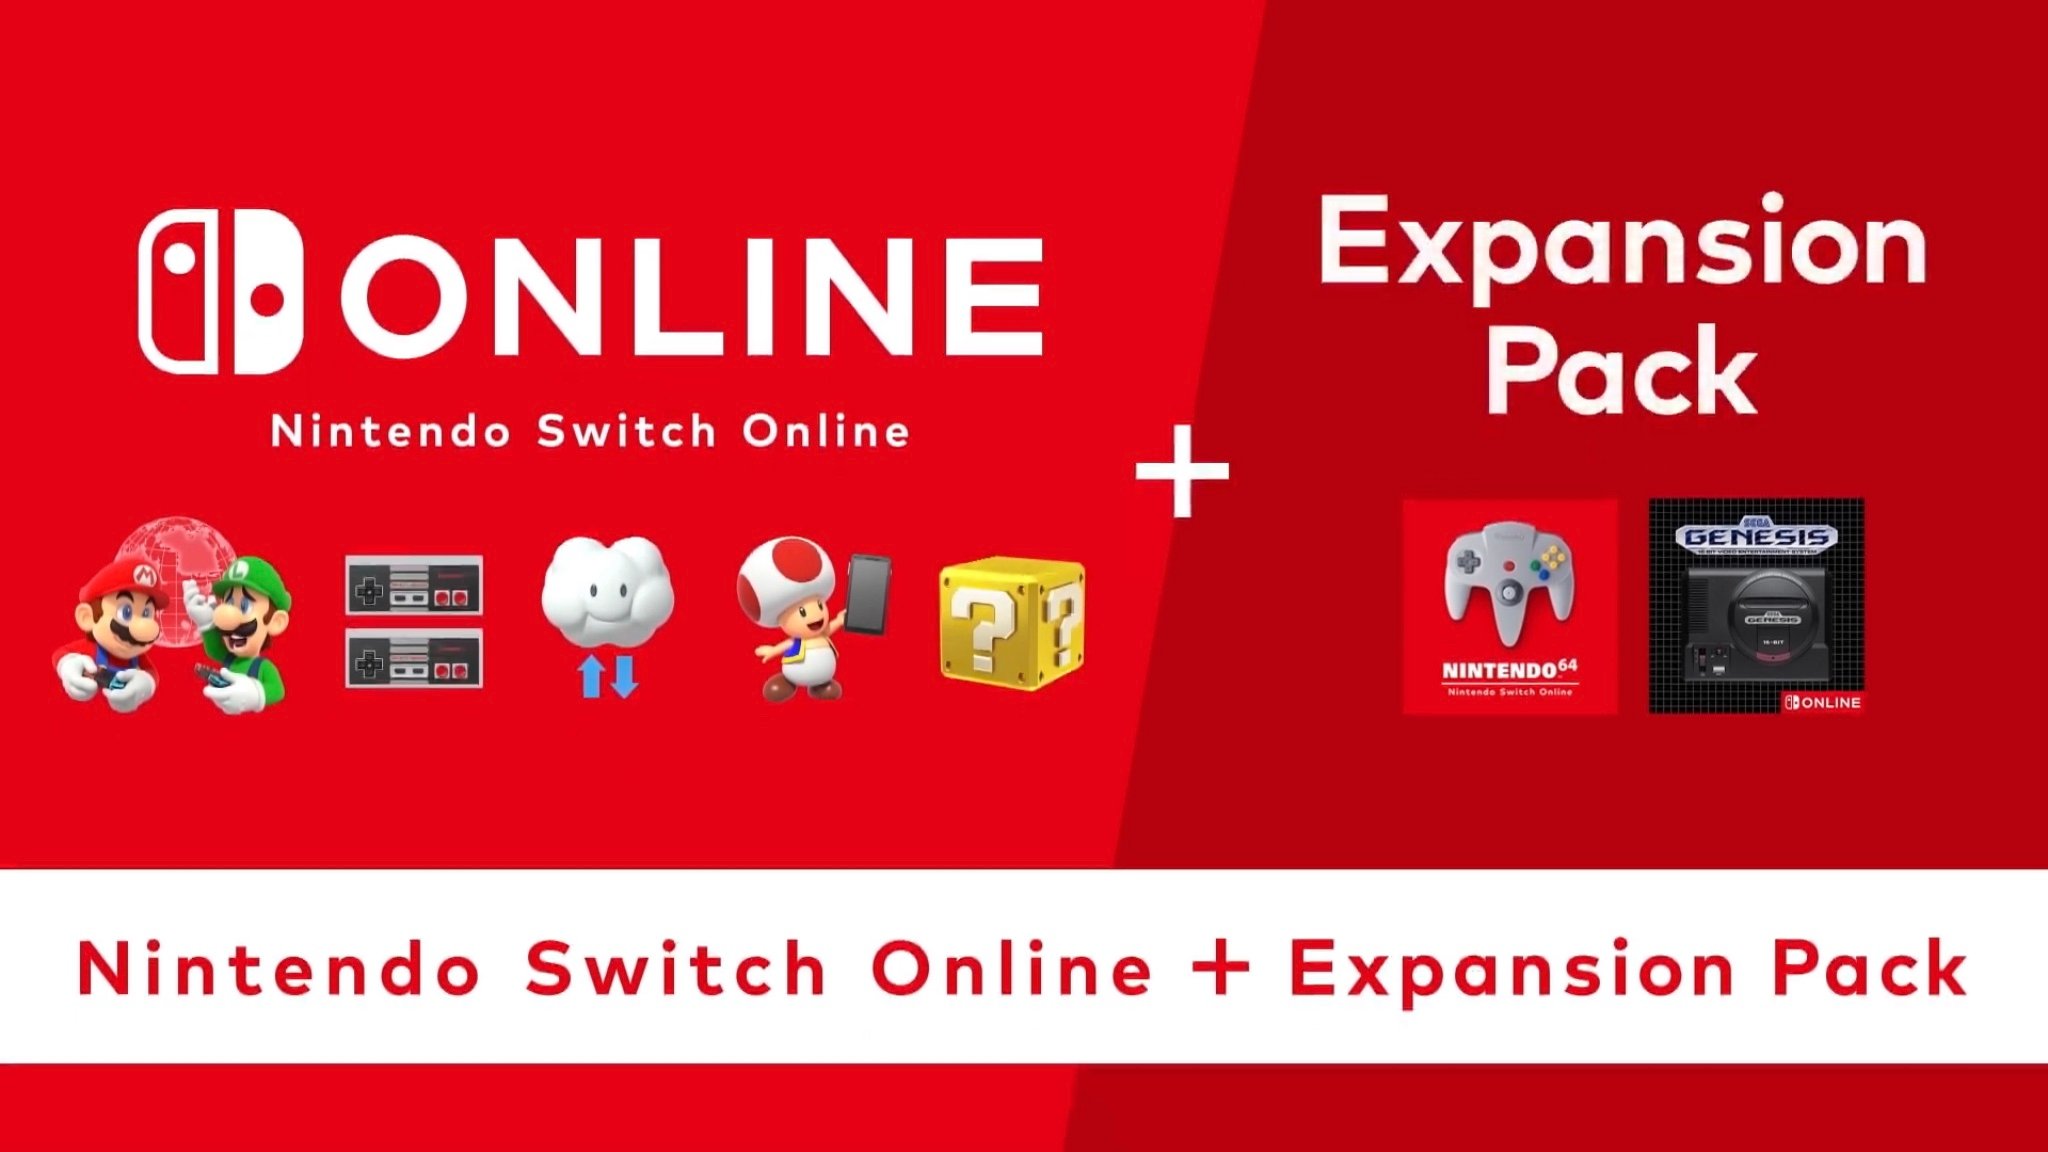 alt="Nintendo Switch Online Expansion"